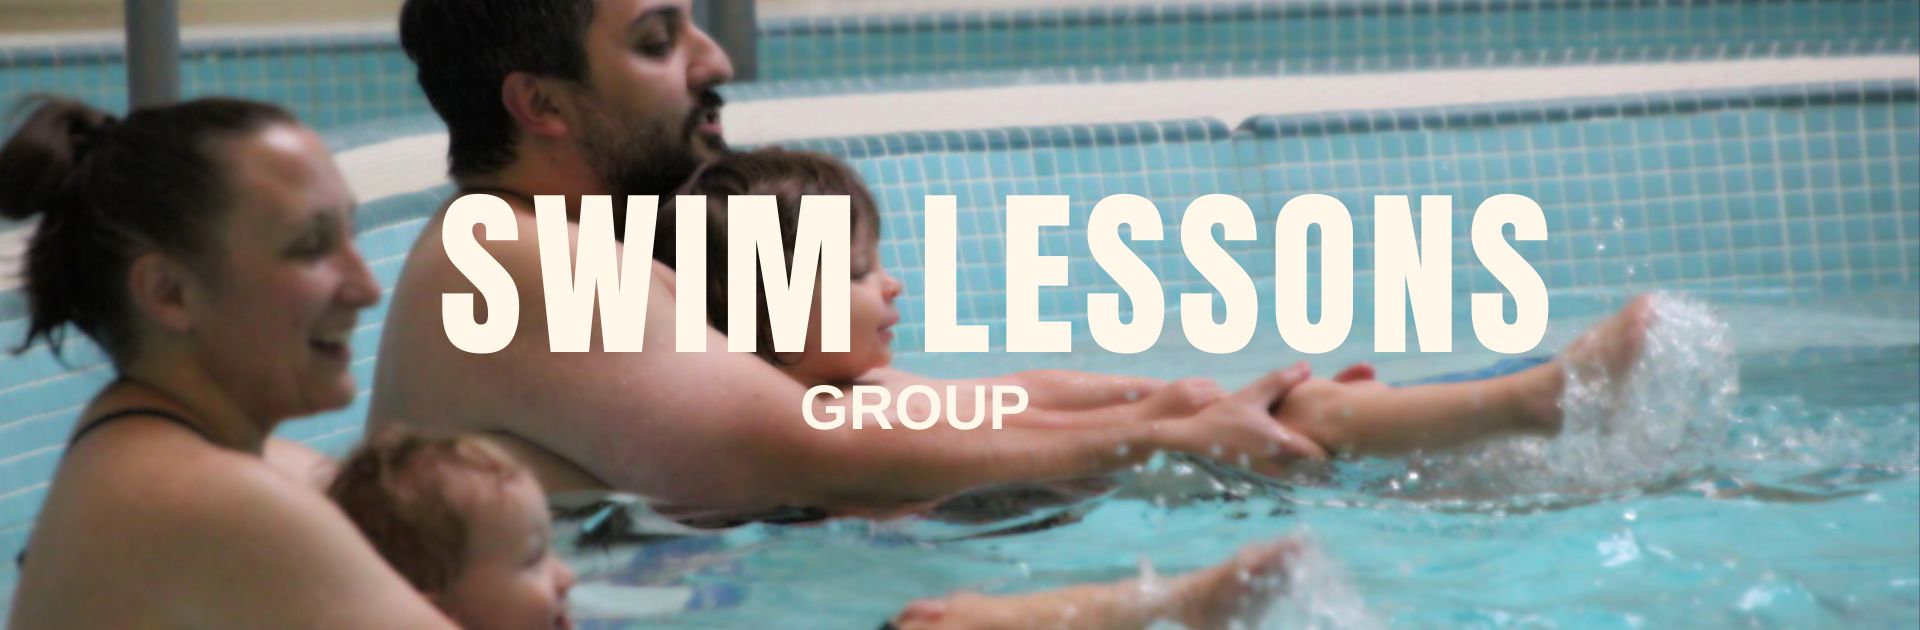 Group swim lessons